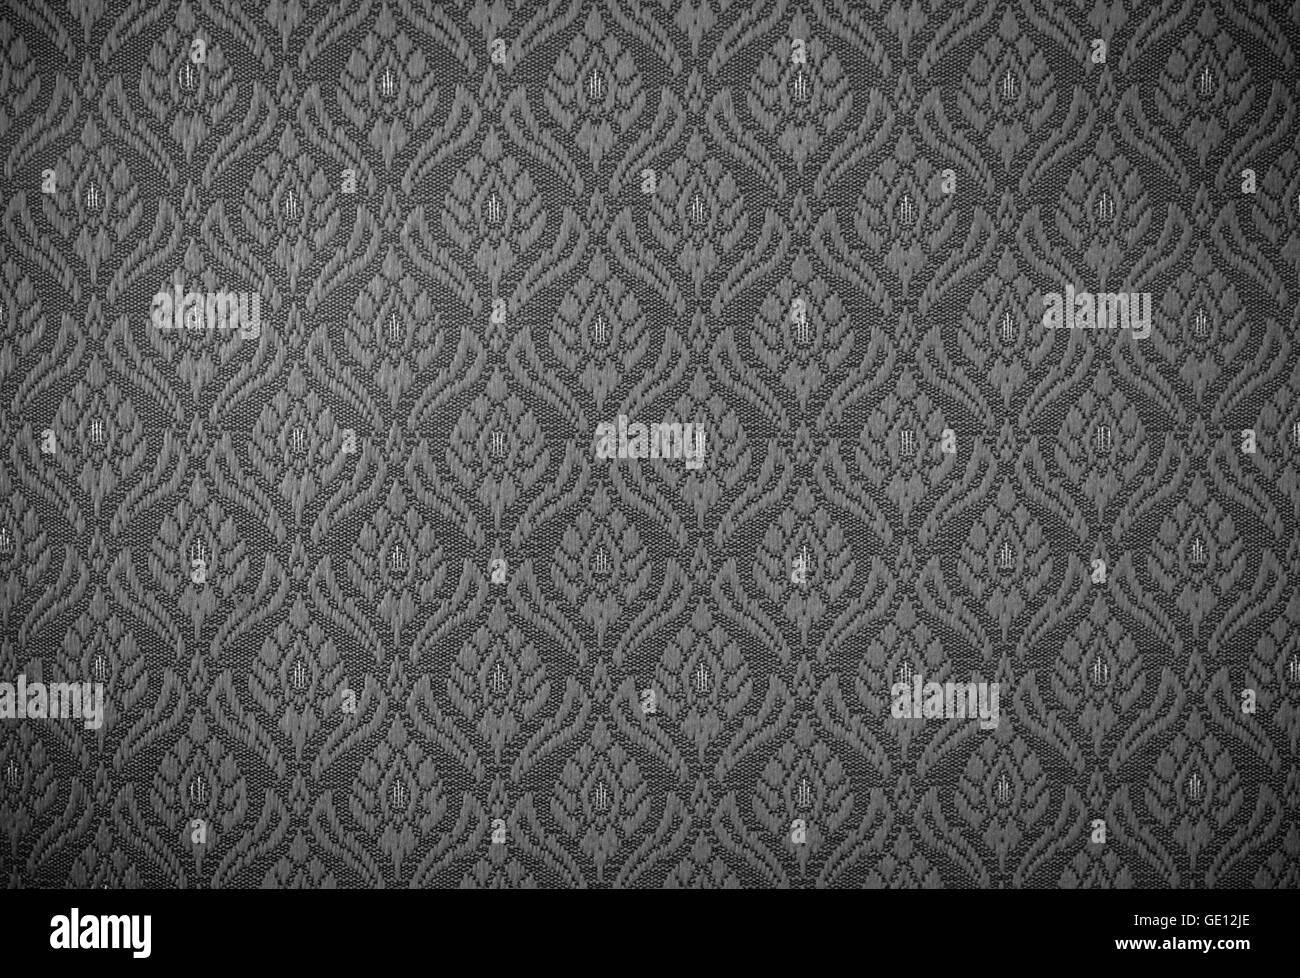 Background of Thai style handmade fabric pattern. Stock Photo